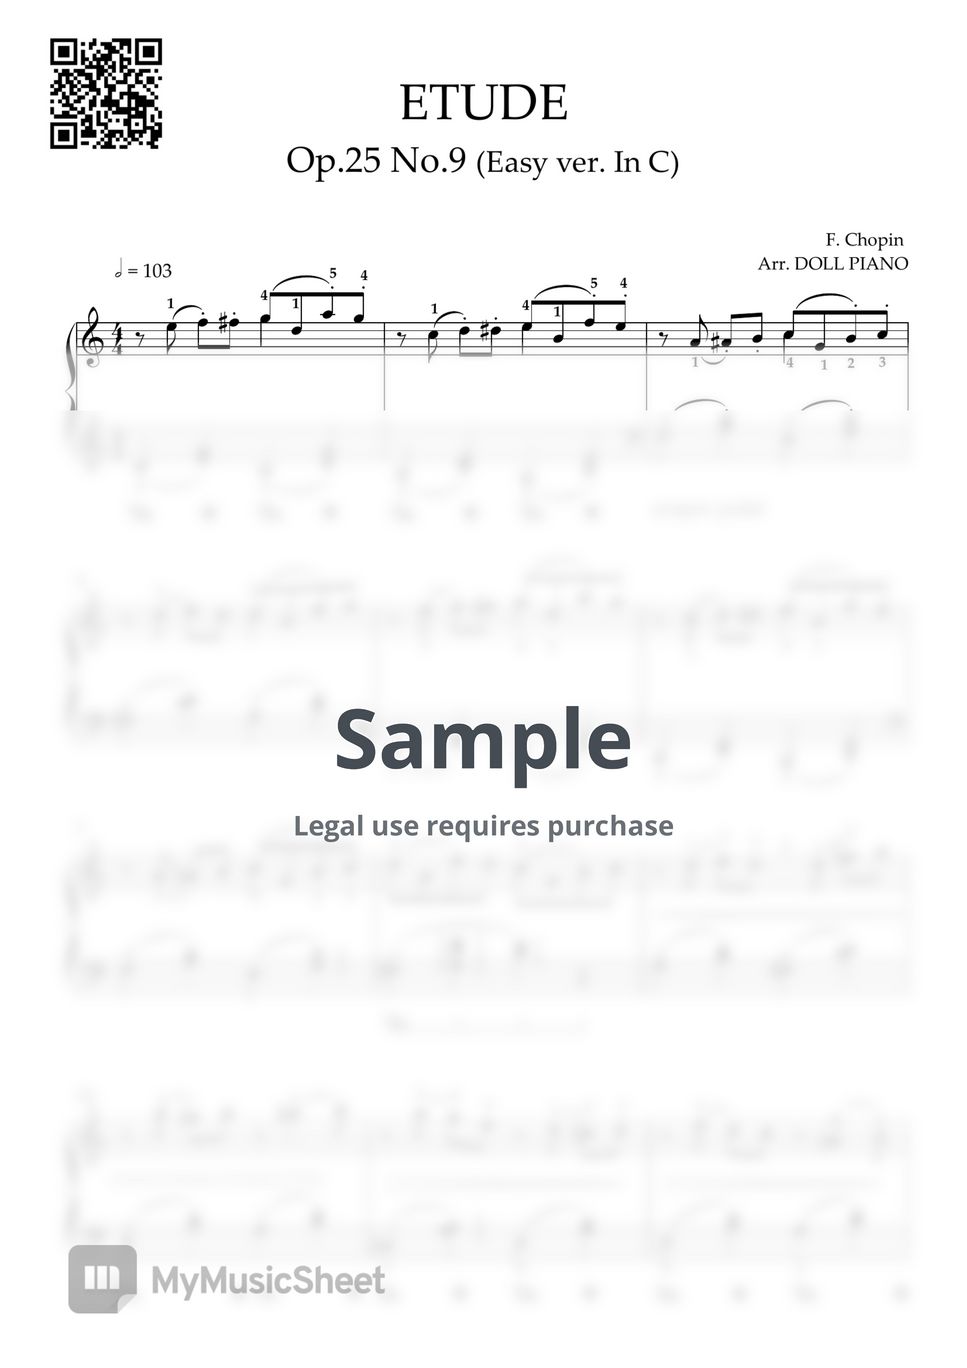 chopin - 쇼팽 에튀드 Op.25 No.9 (나비) (쉬운버전, 다장조, 작은손) by DOLL PIANO